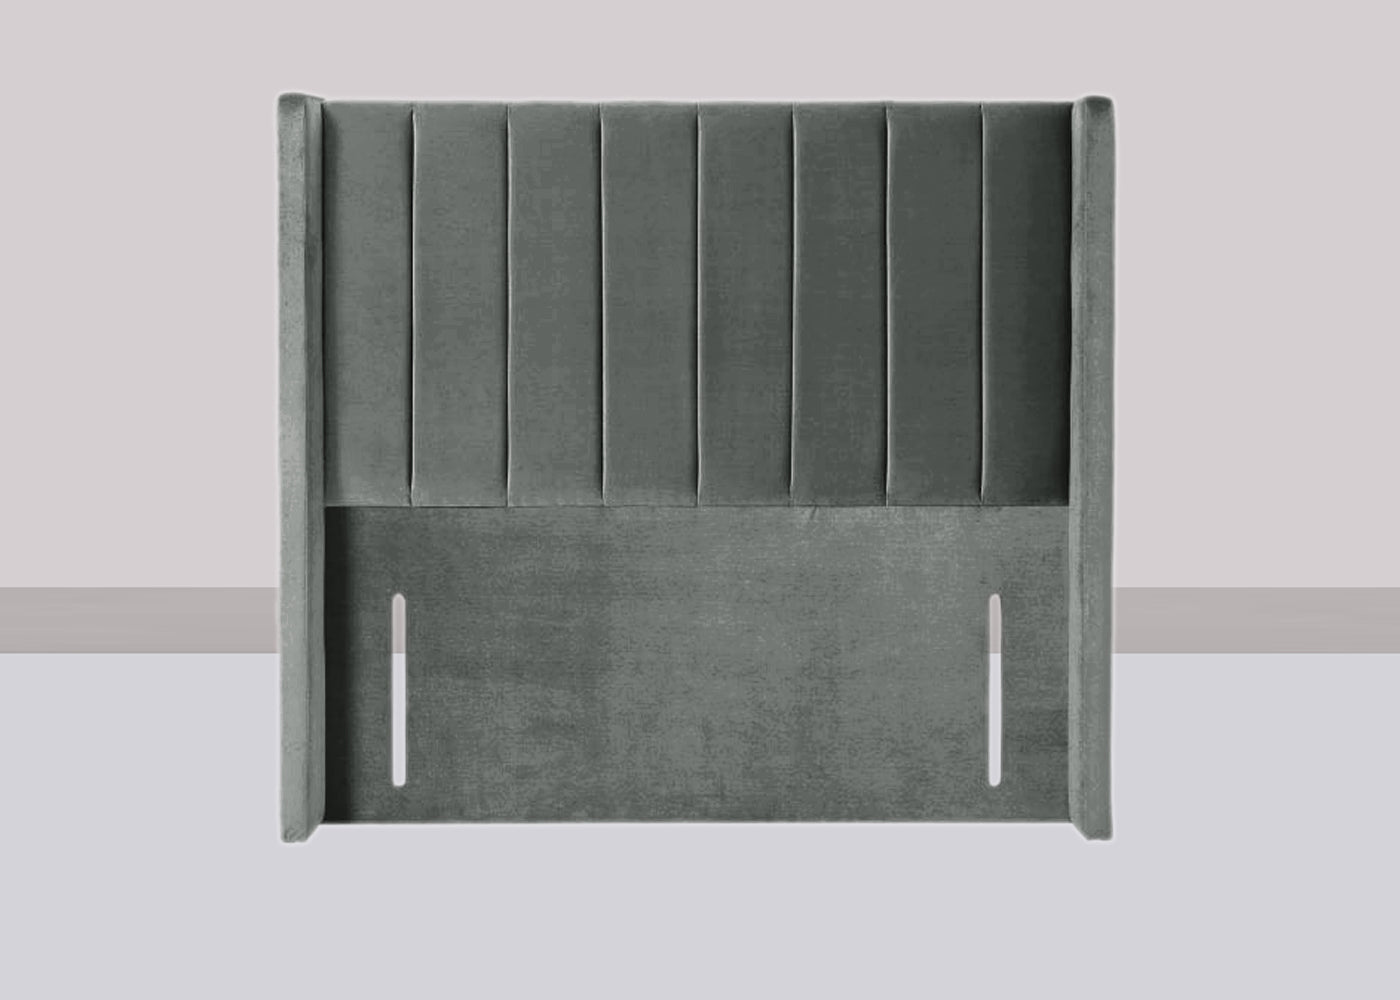  Trafalgar Winged Floorstanding headboard With Storage Options